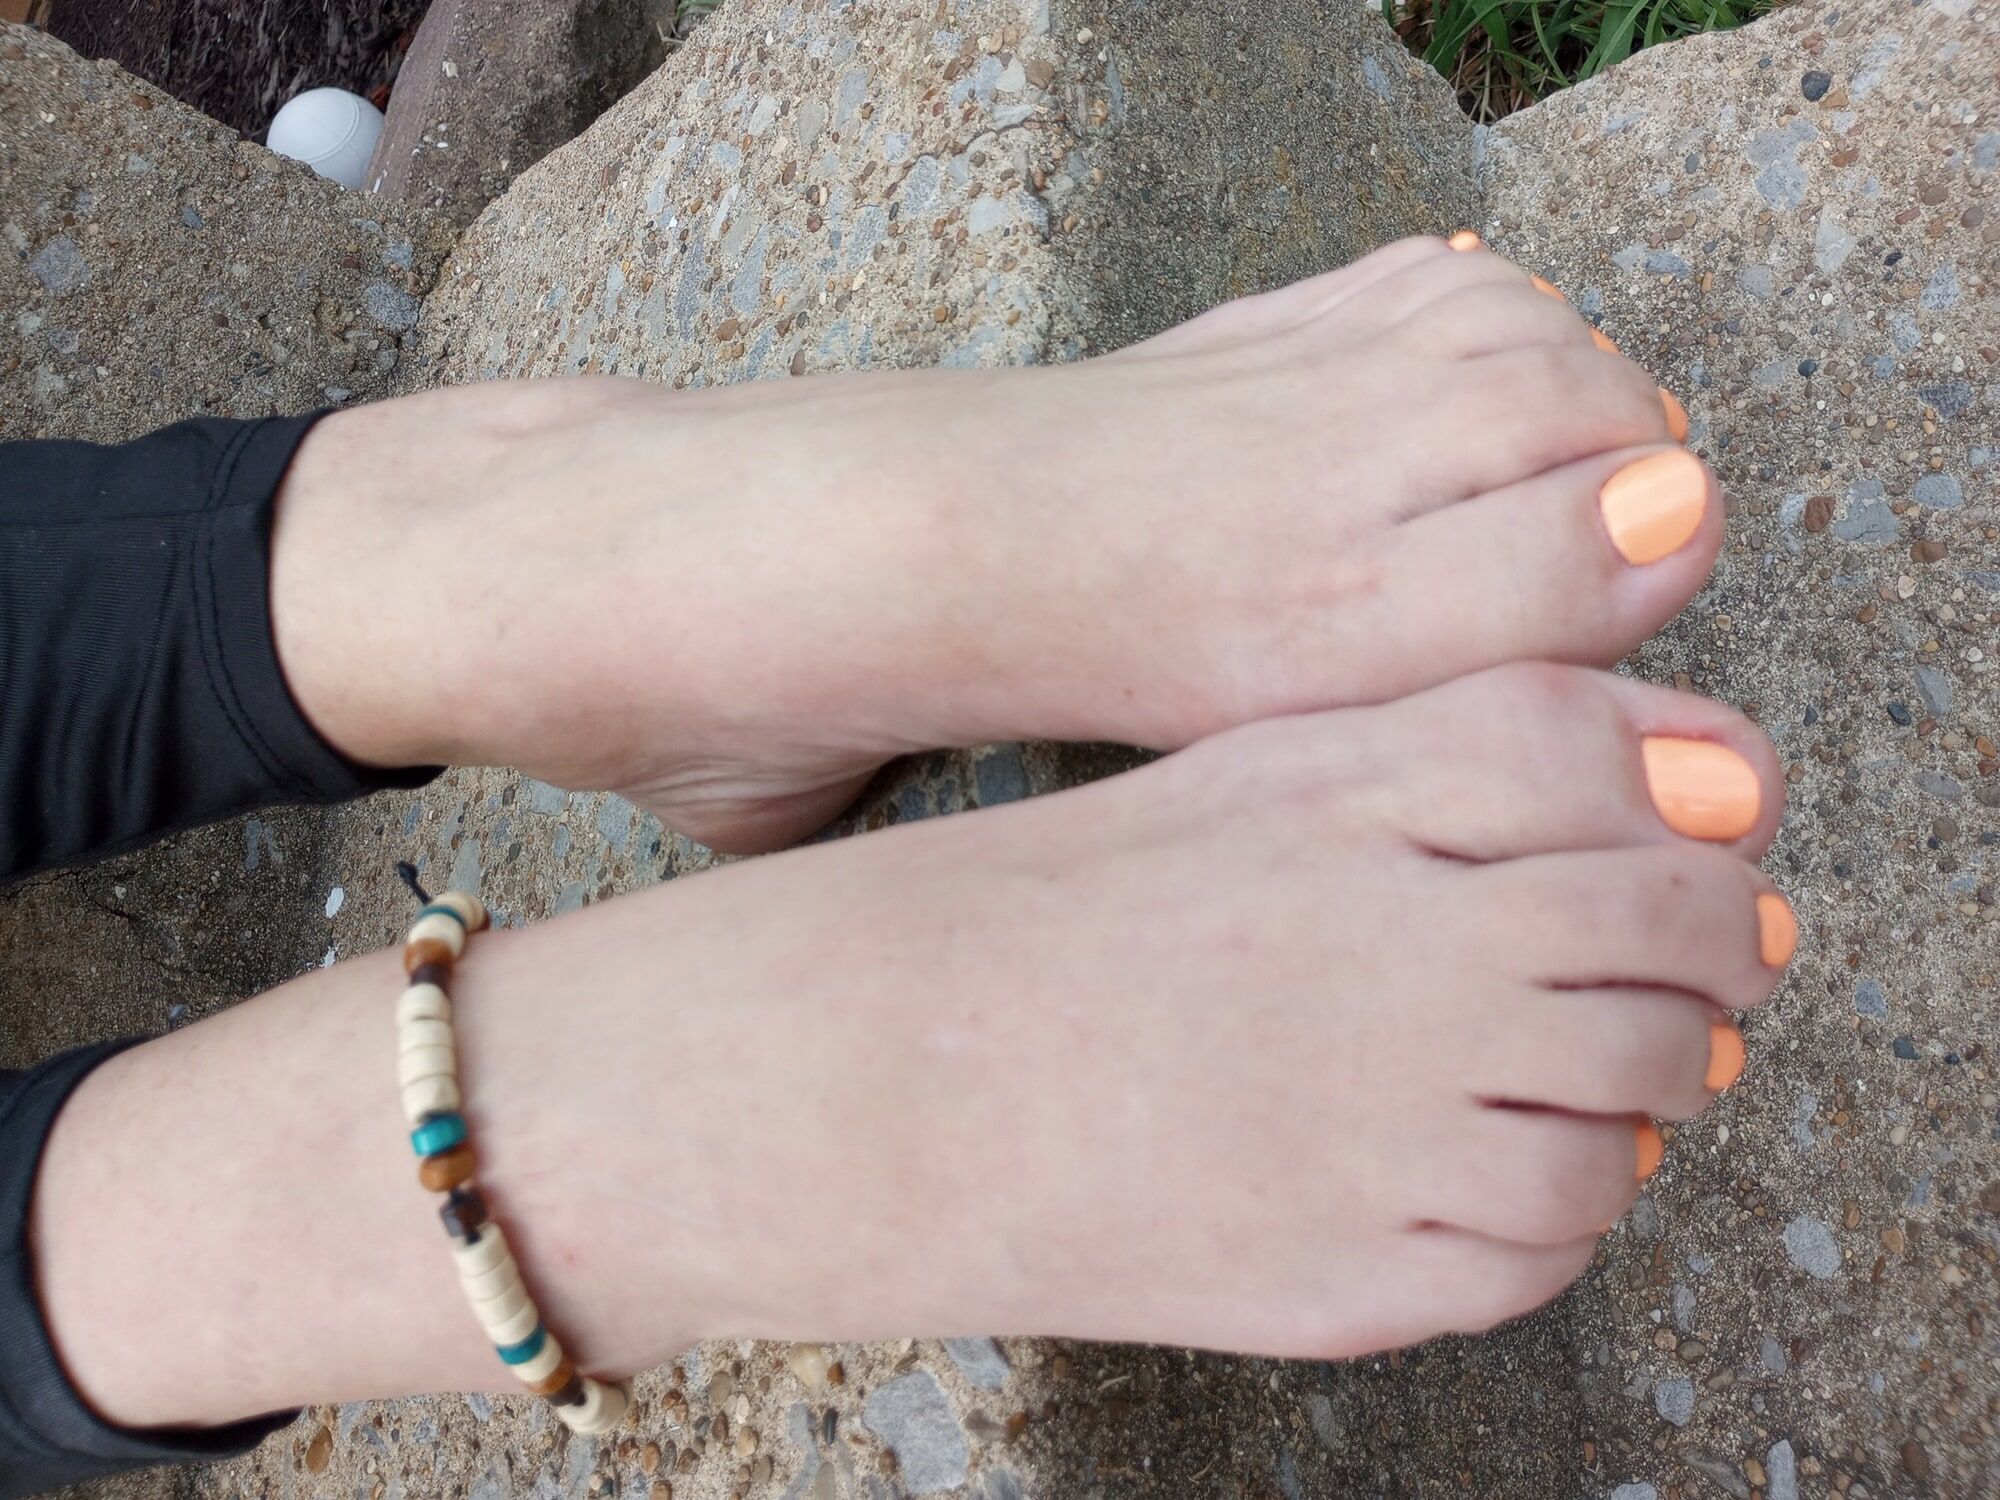 Showing Off Her Anklet 2 #8